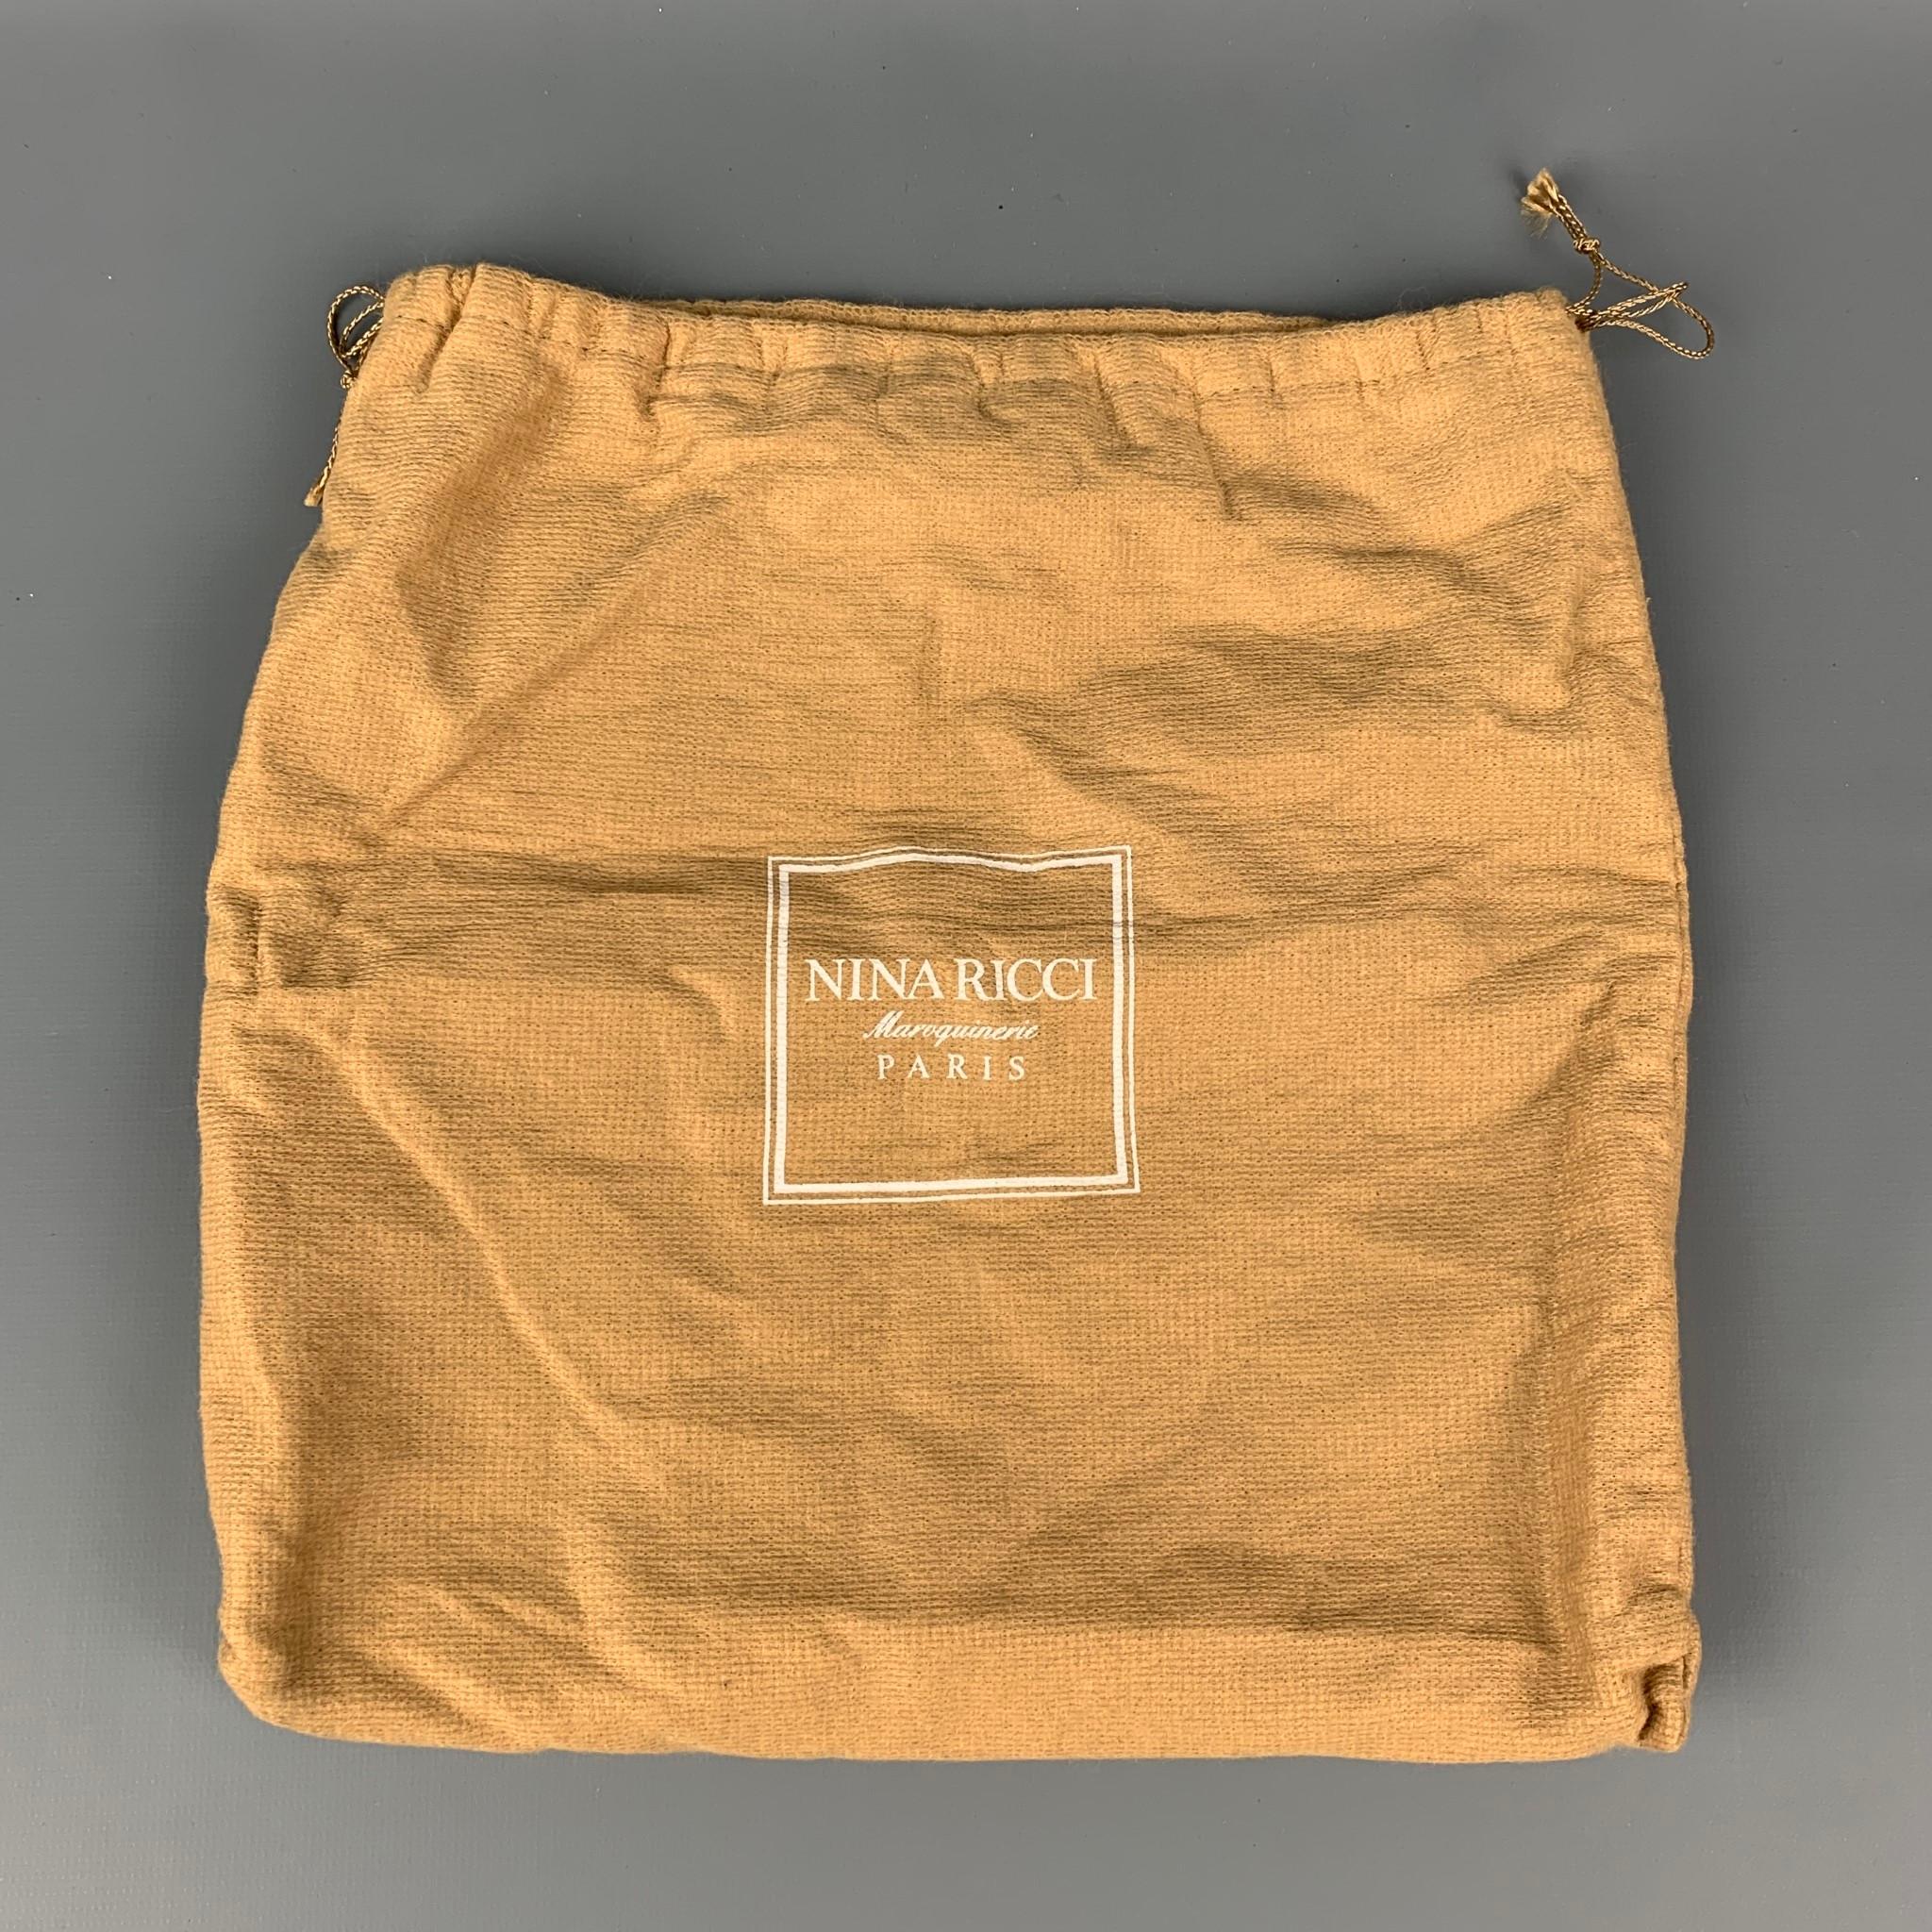 Vintage NINA RICCI Tan and Gold Contrast Stitch Leather Clutch Handbag ...